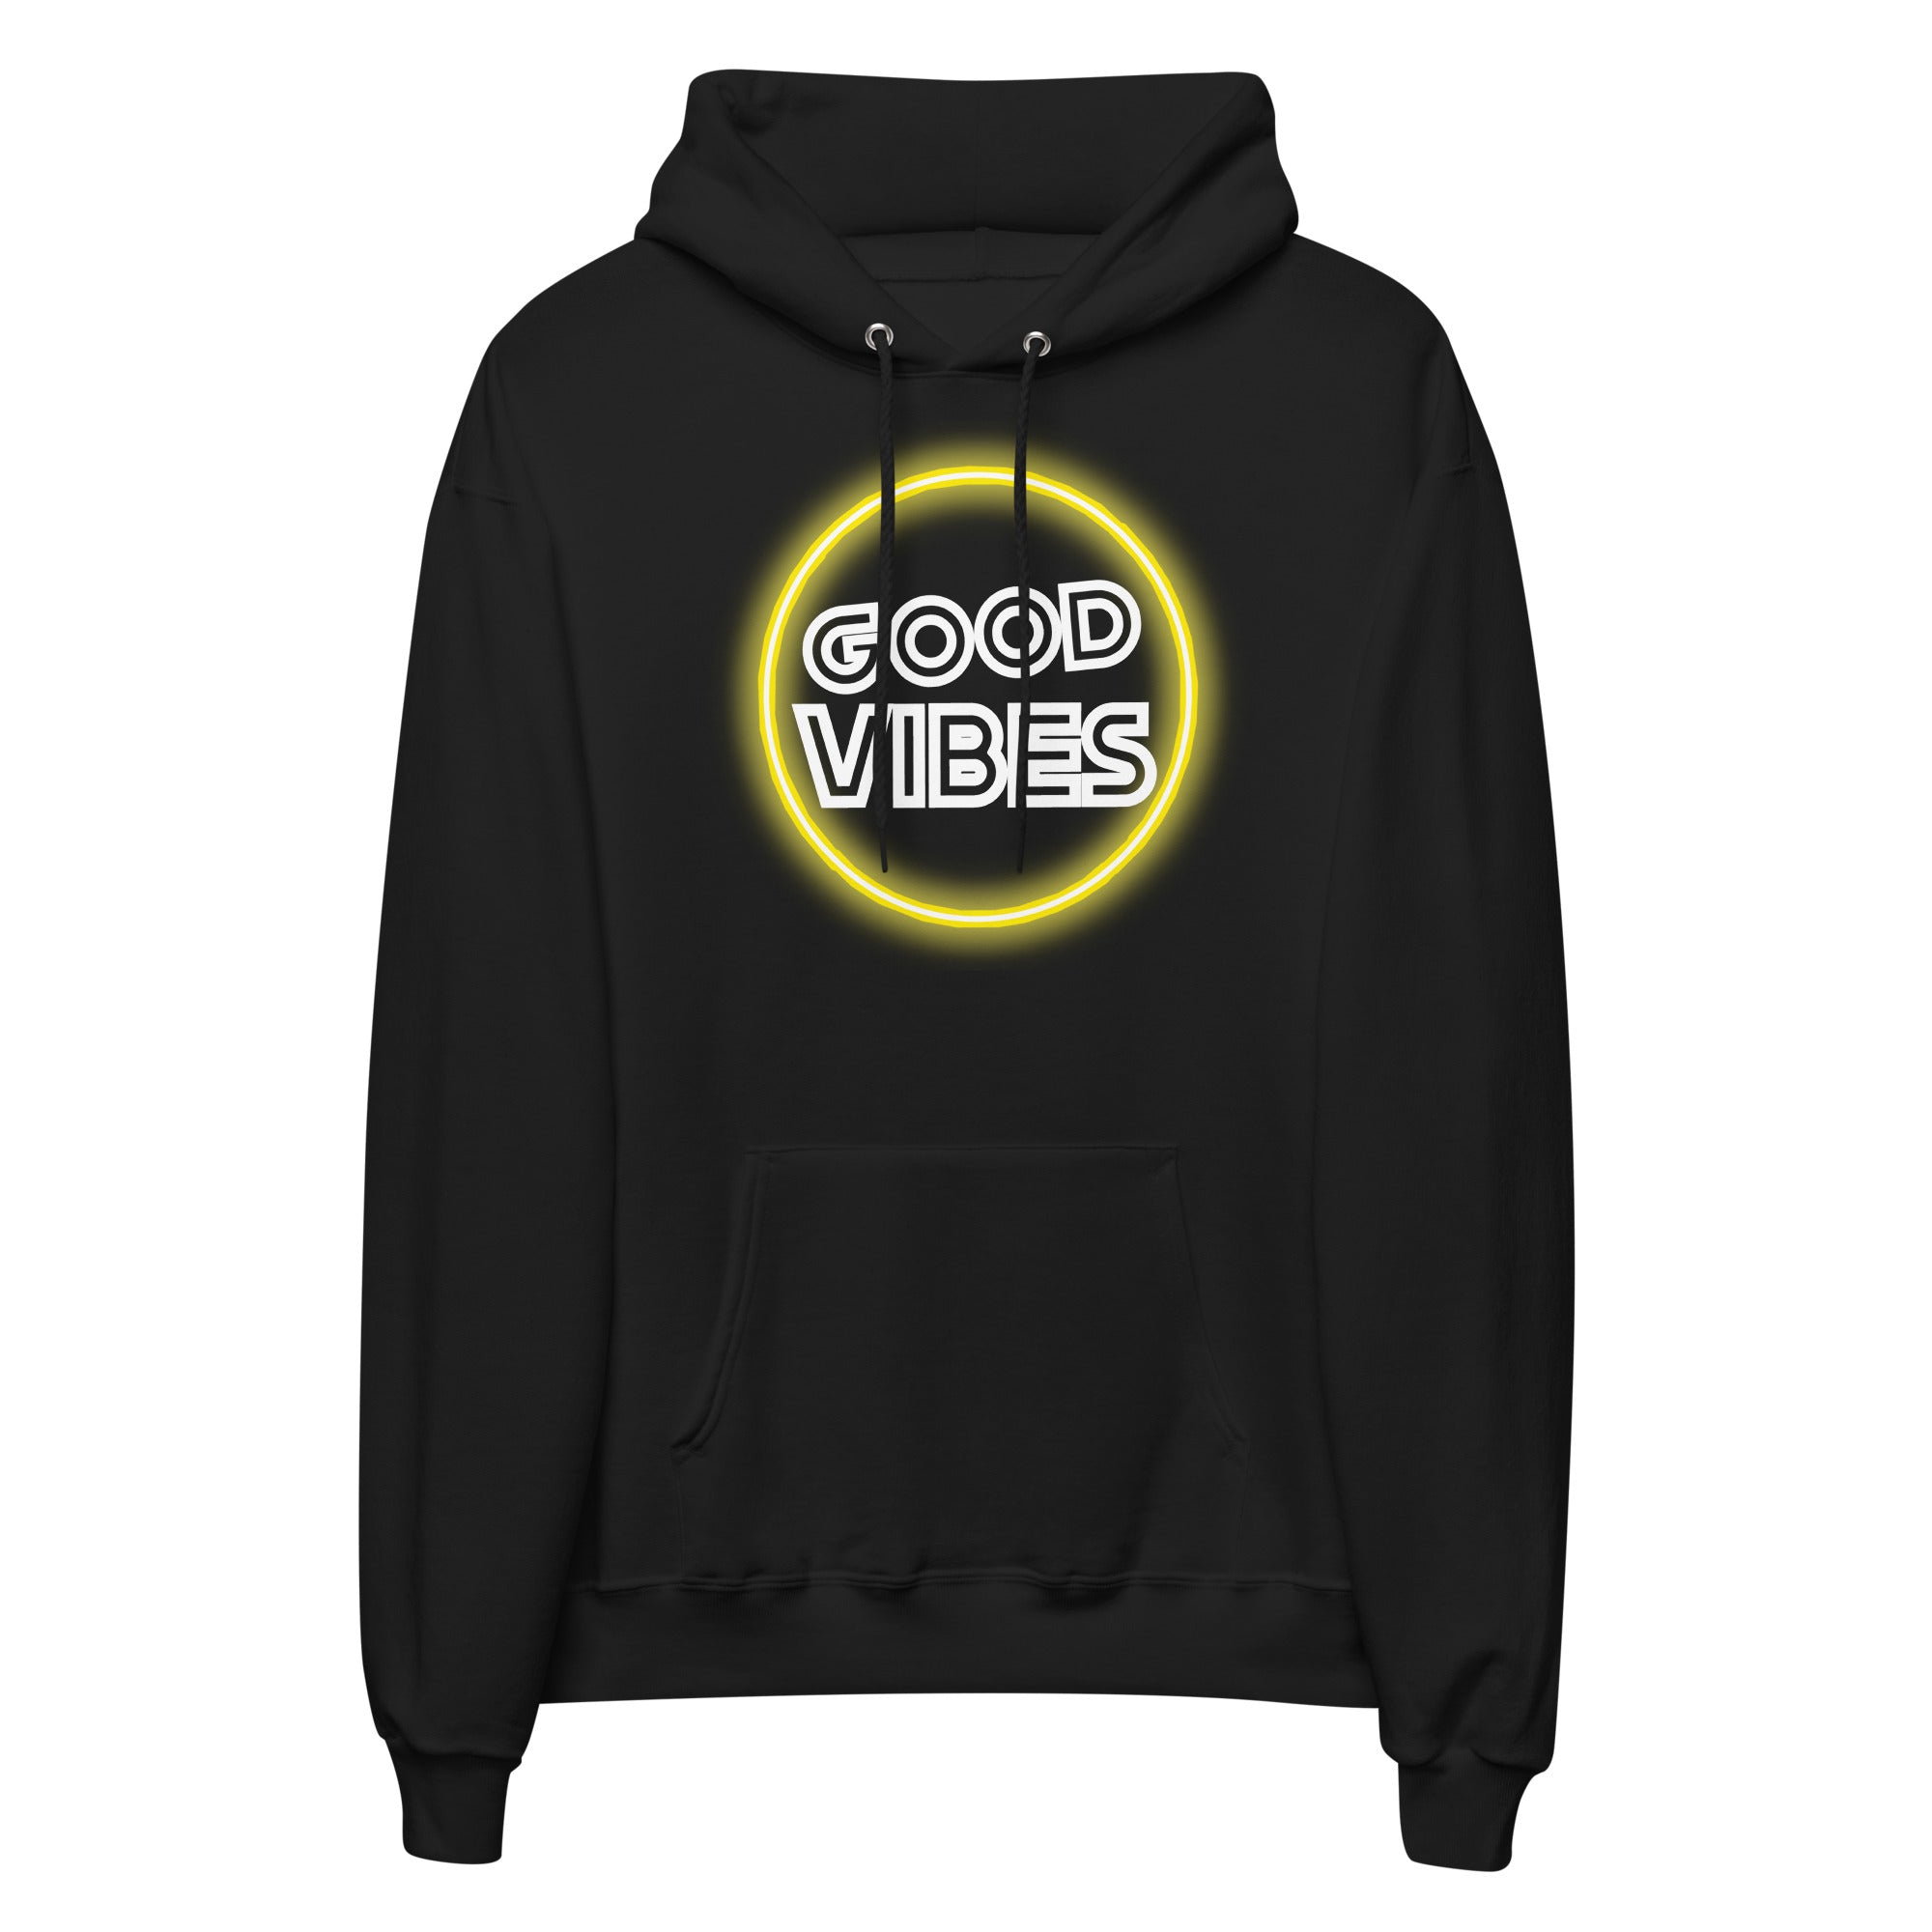  good vibes hoodies